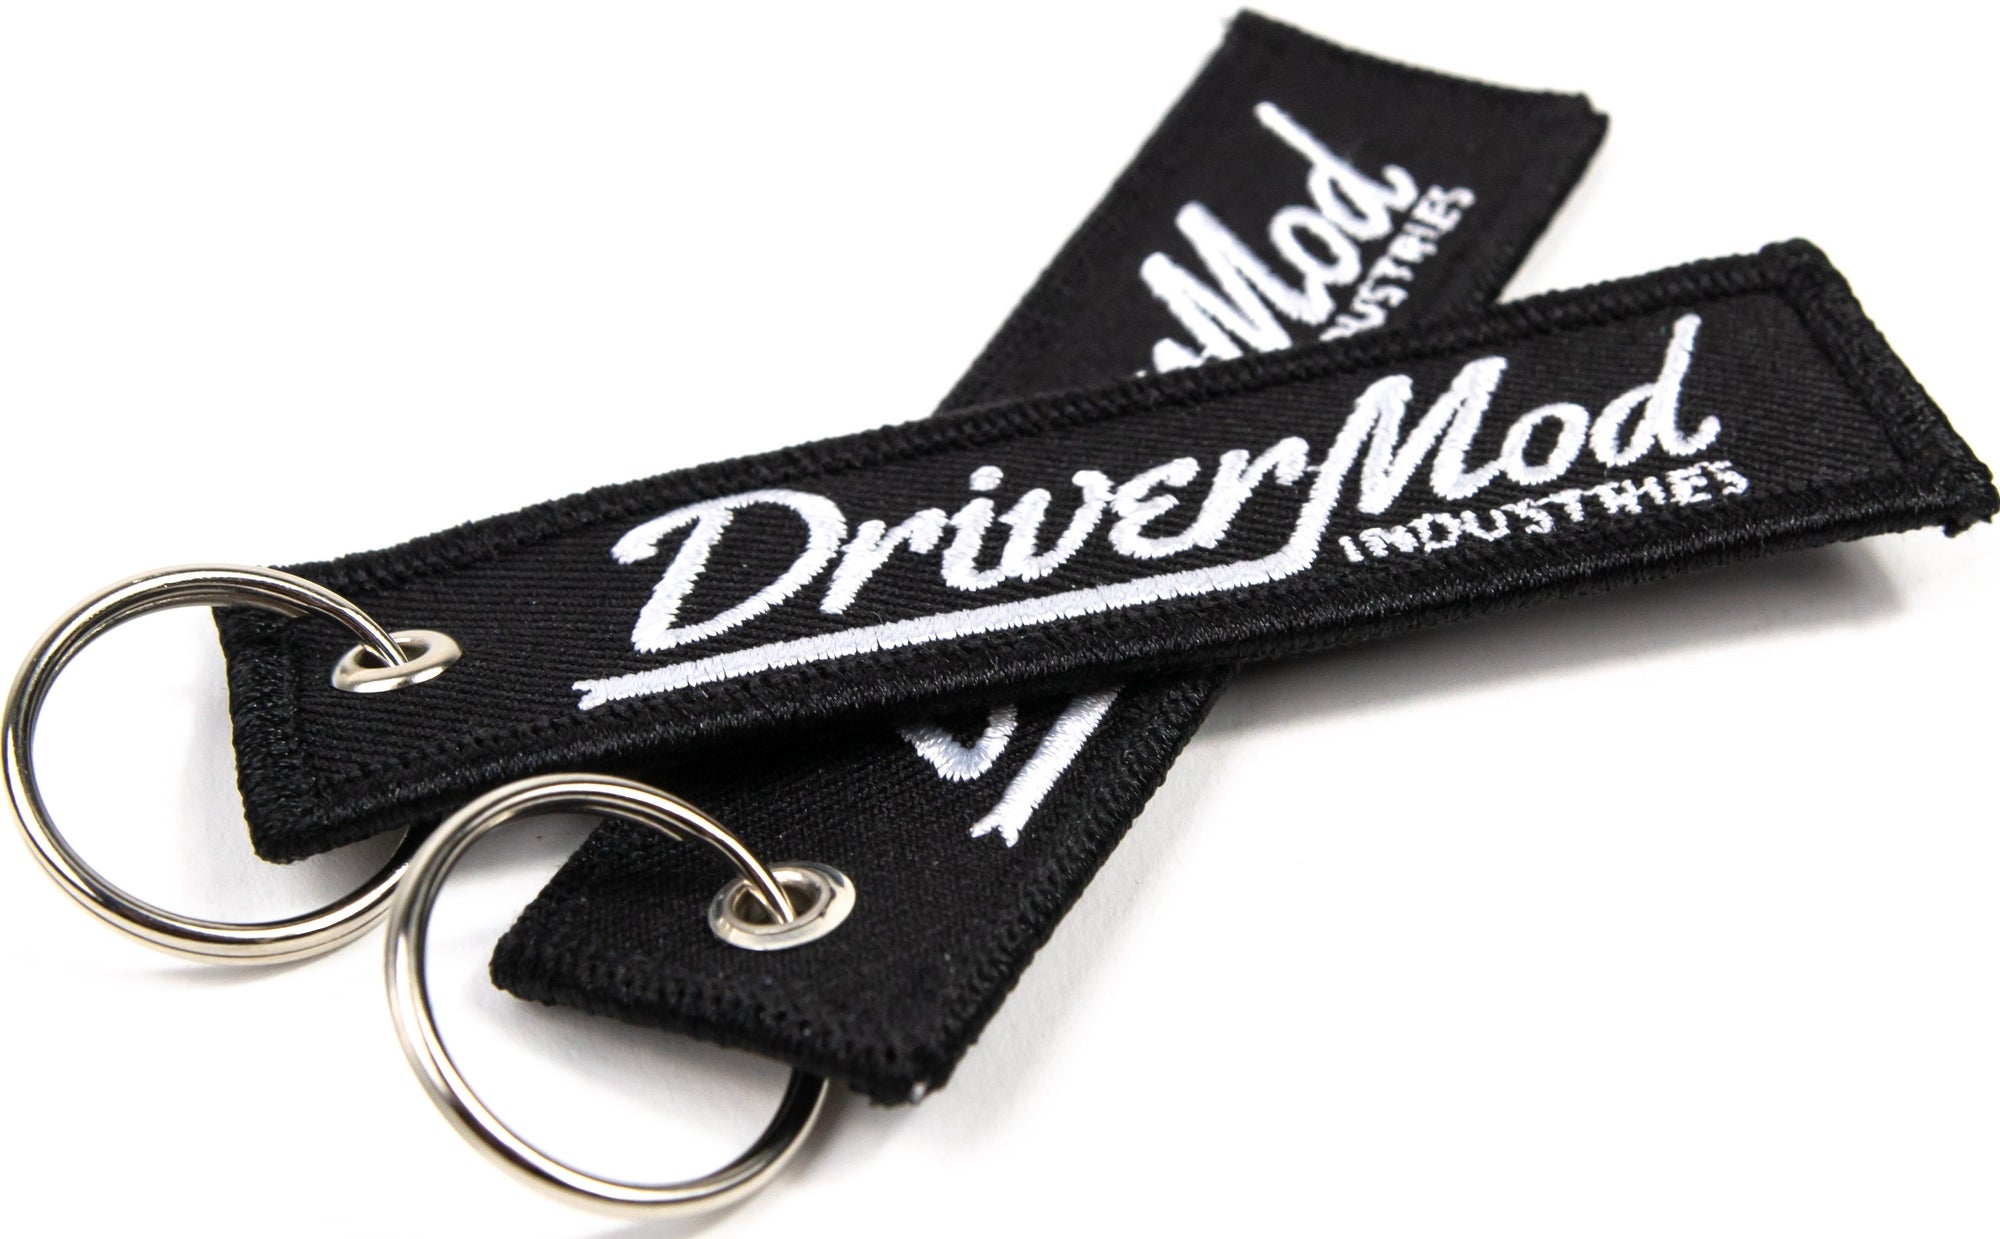 DriverMod Industries Merch